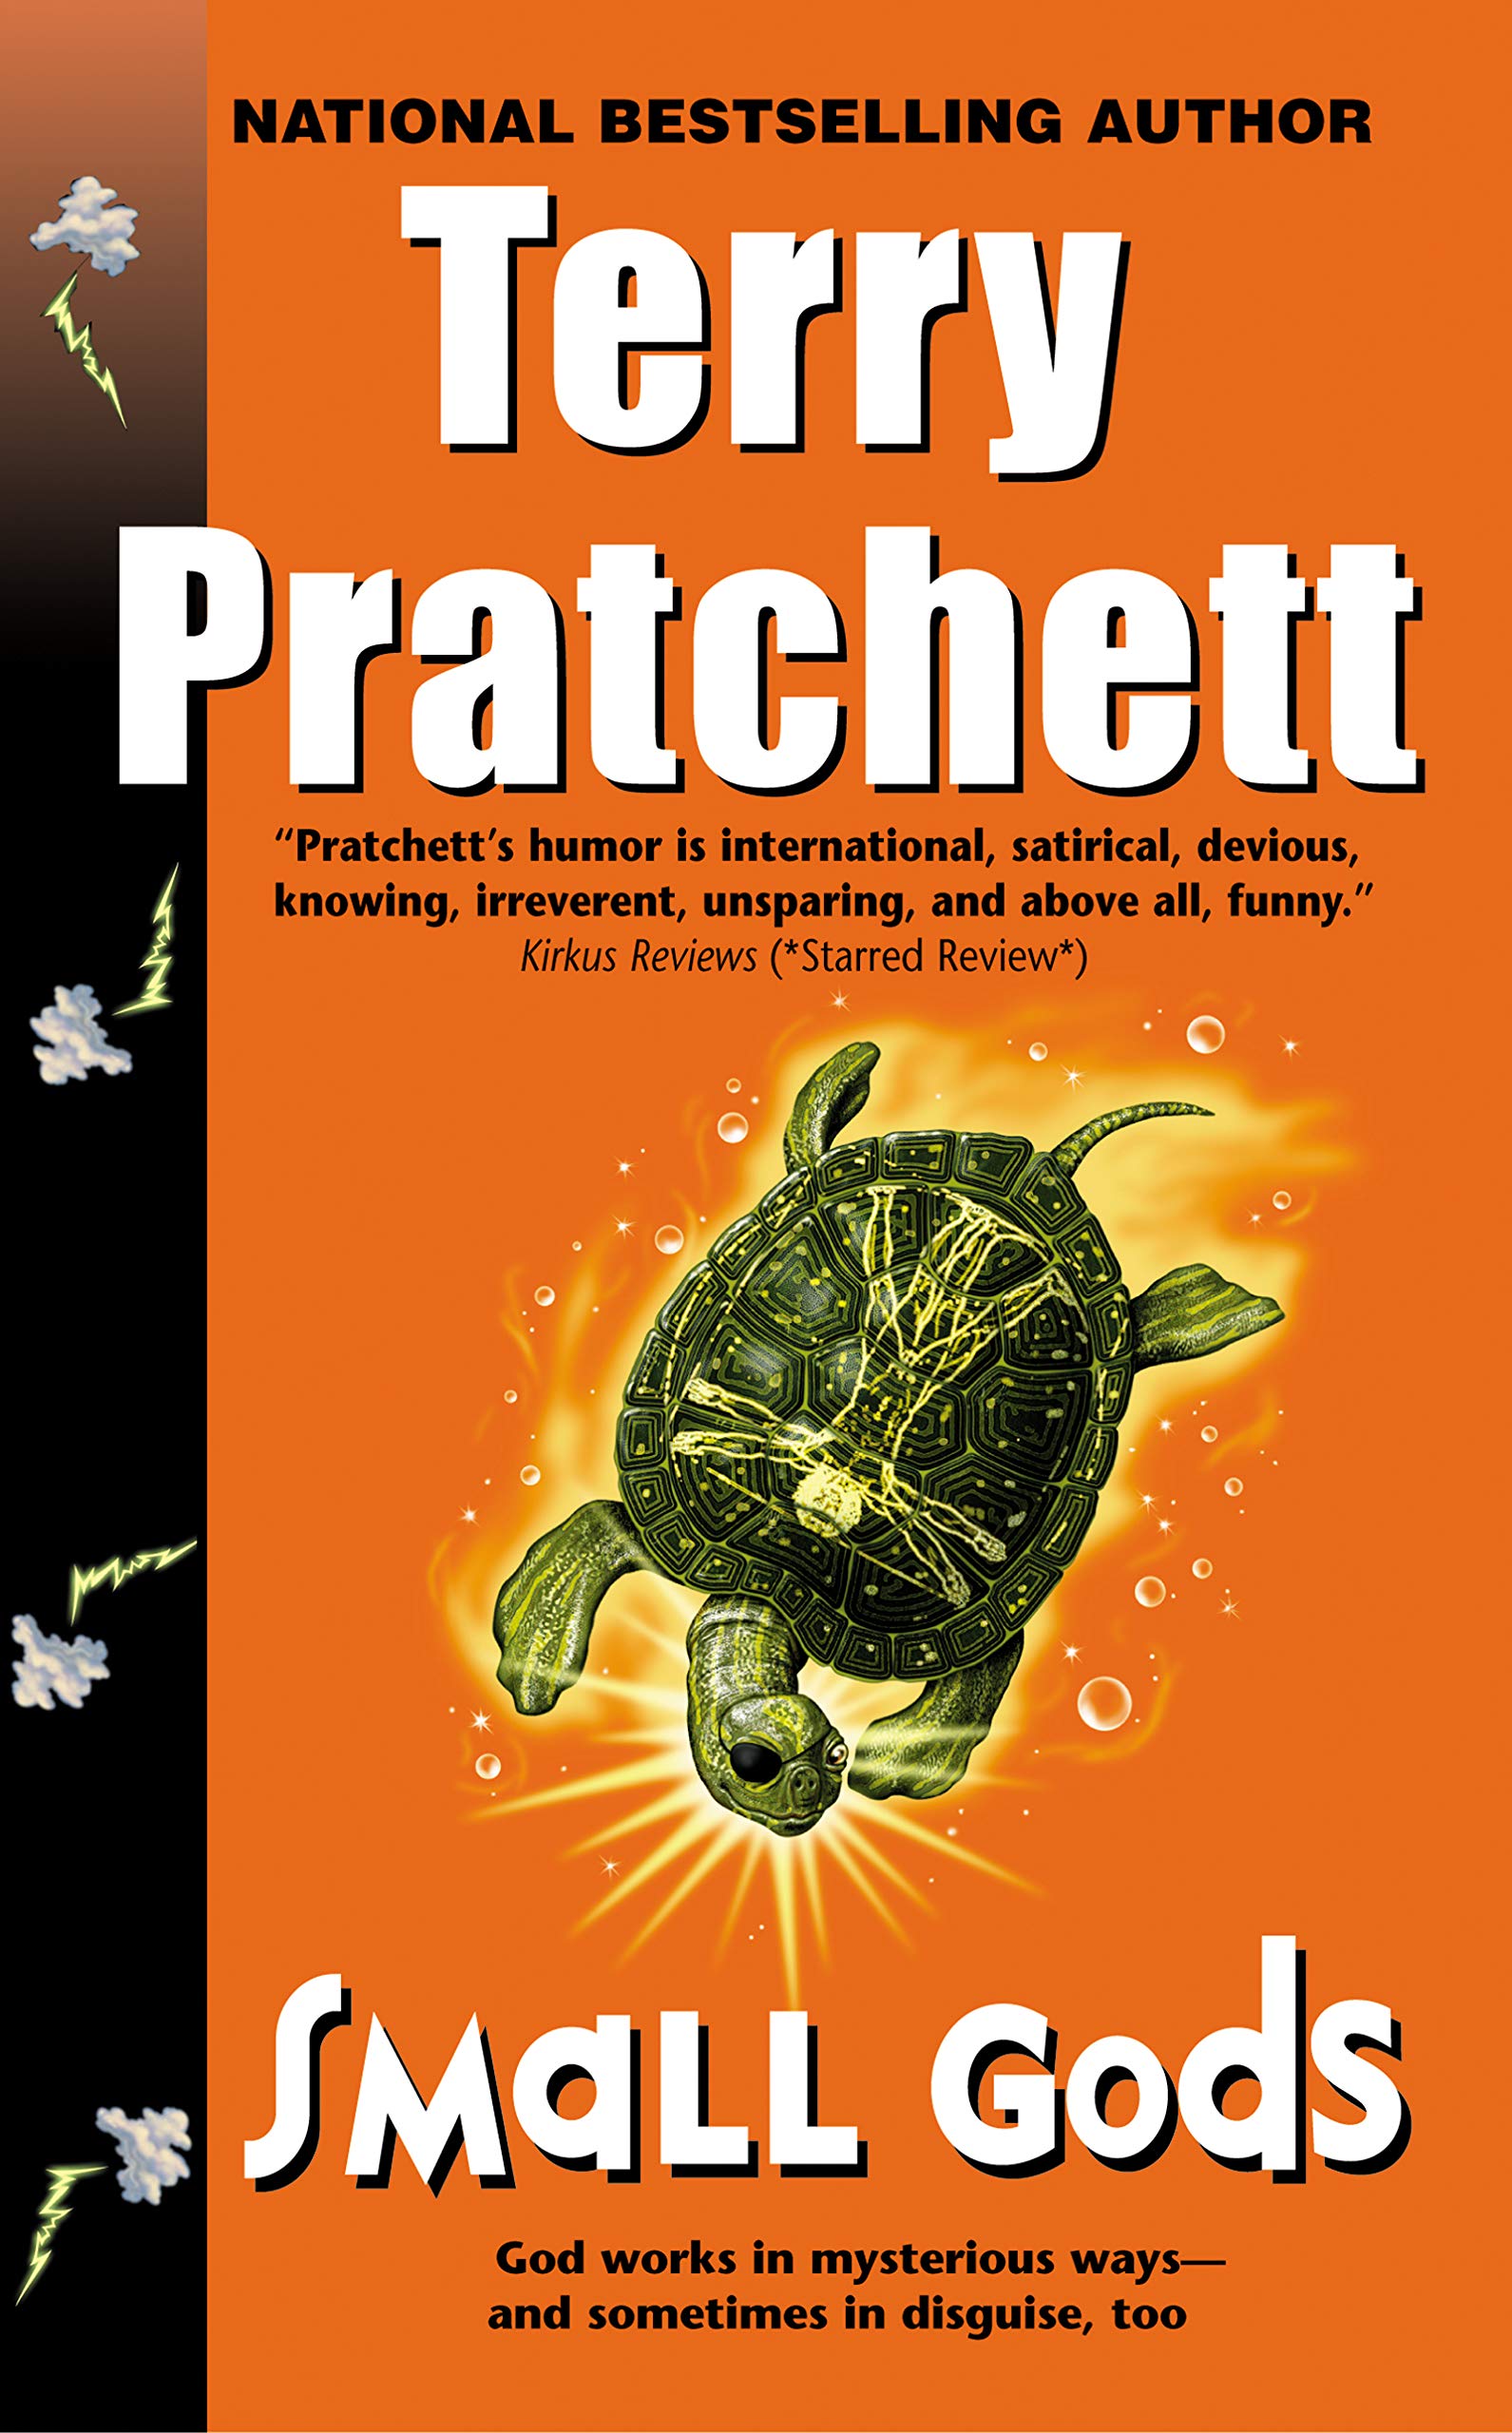 Small Gods: A Discworld Novel (eBook) by Terry Pratchett $1.99